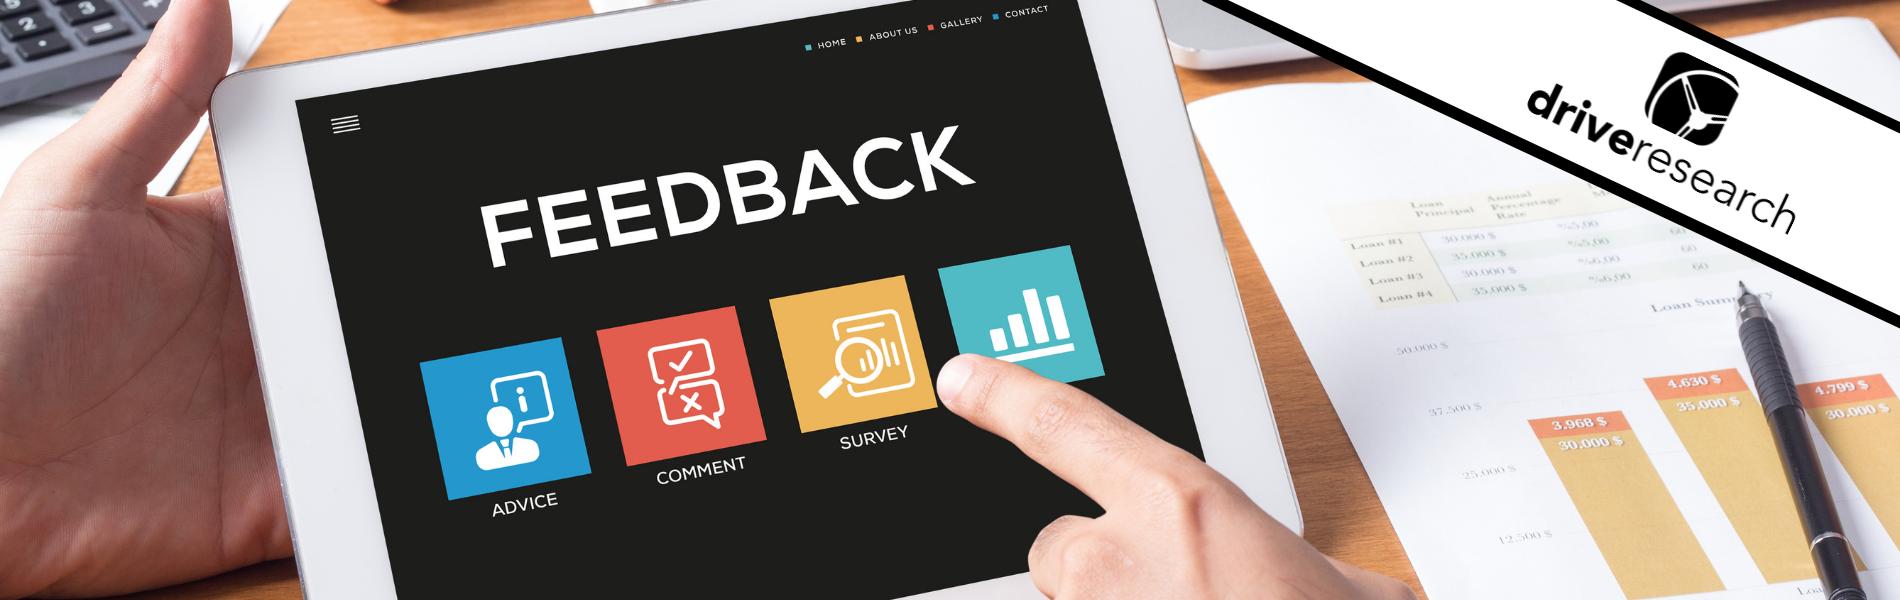 customer feedback research